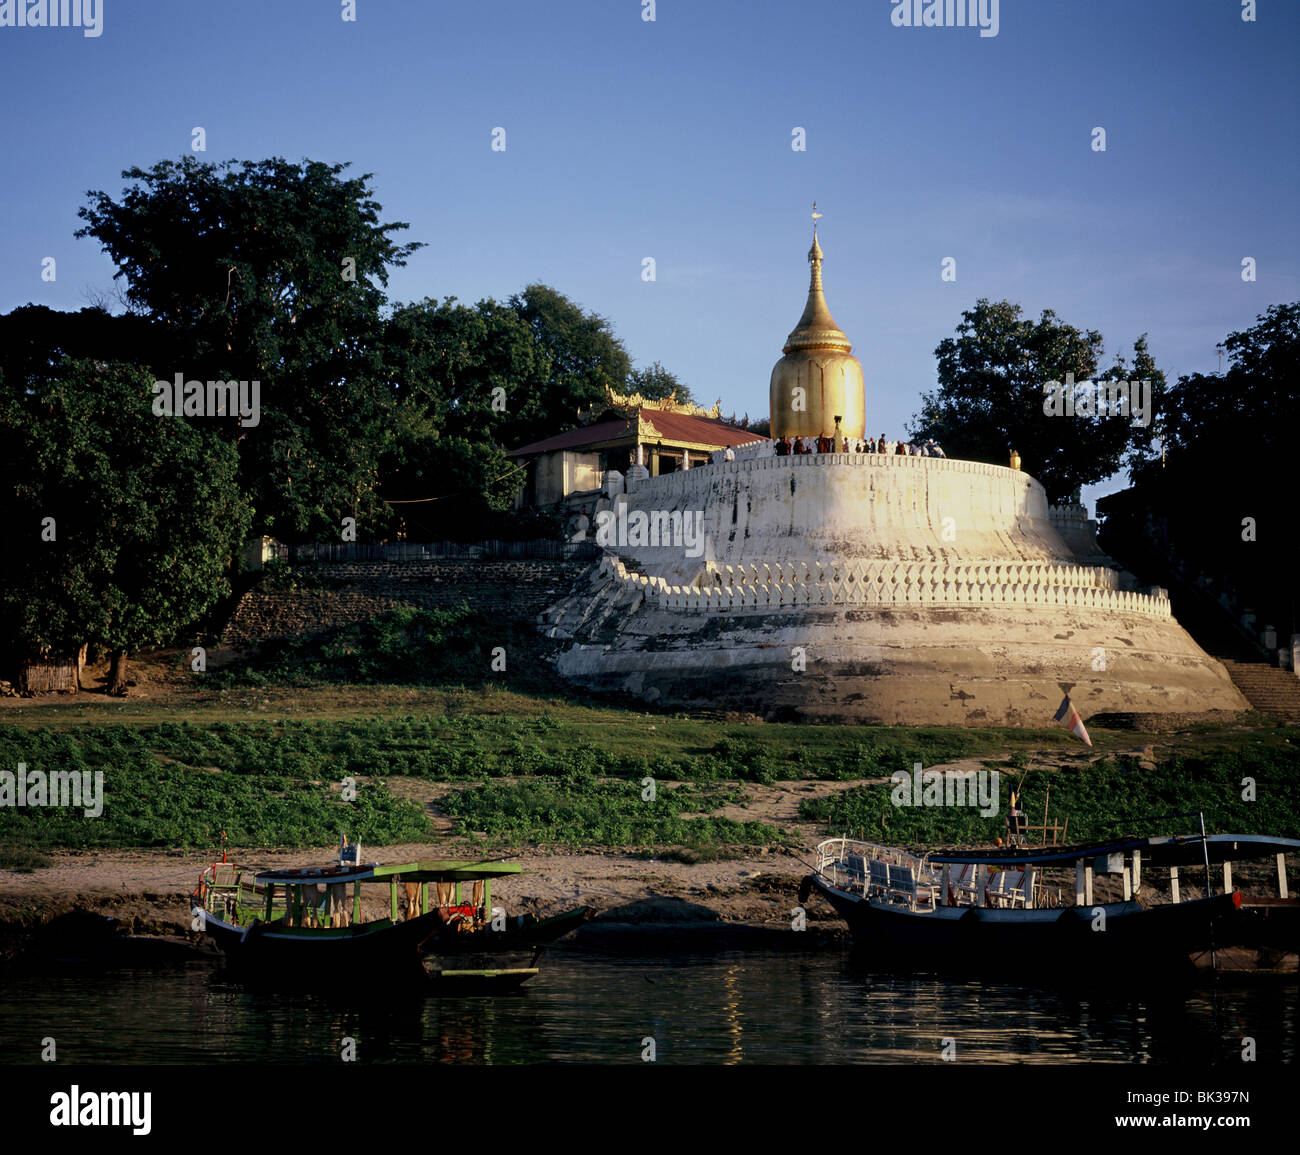 La pagoda Bupaya sulle rive del fiume Irrawaddy, Bagan (pagano), Myanmar (Birmania), Asia Foto Stock